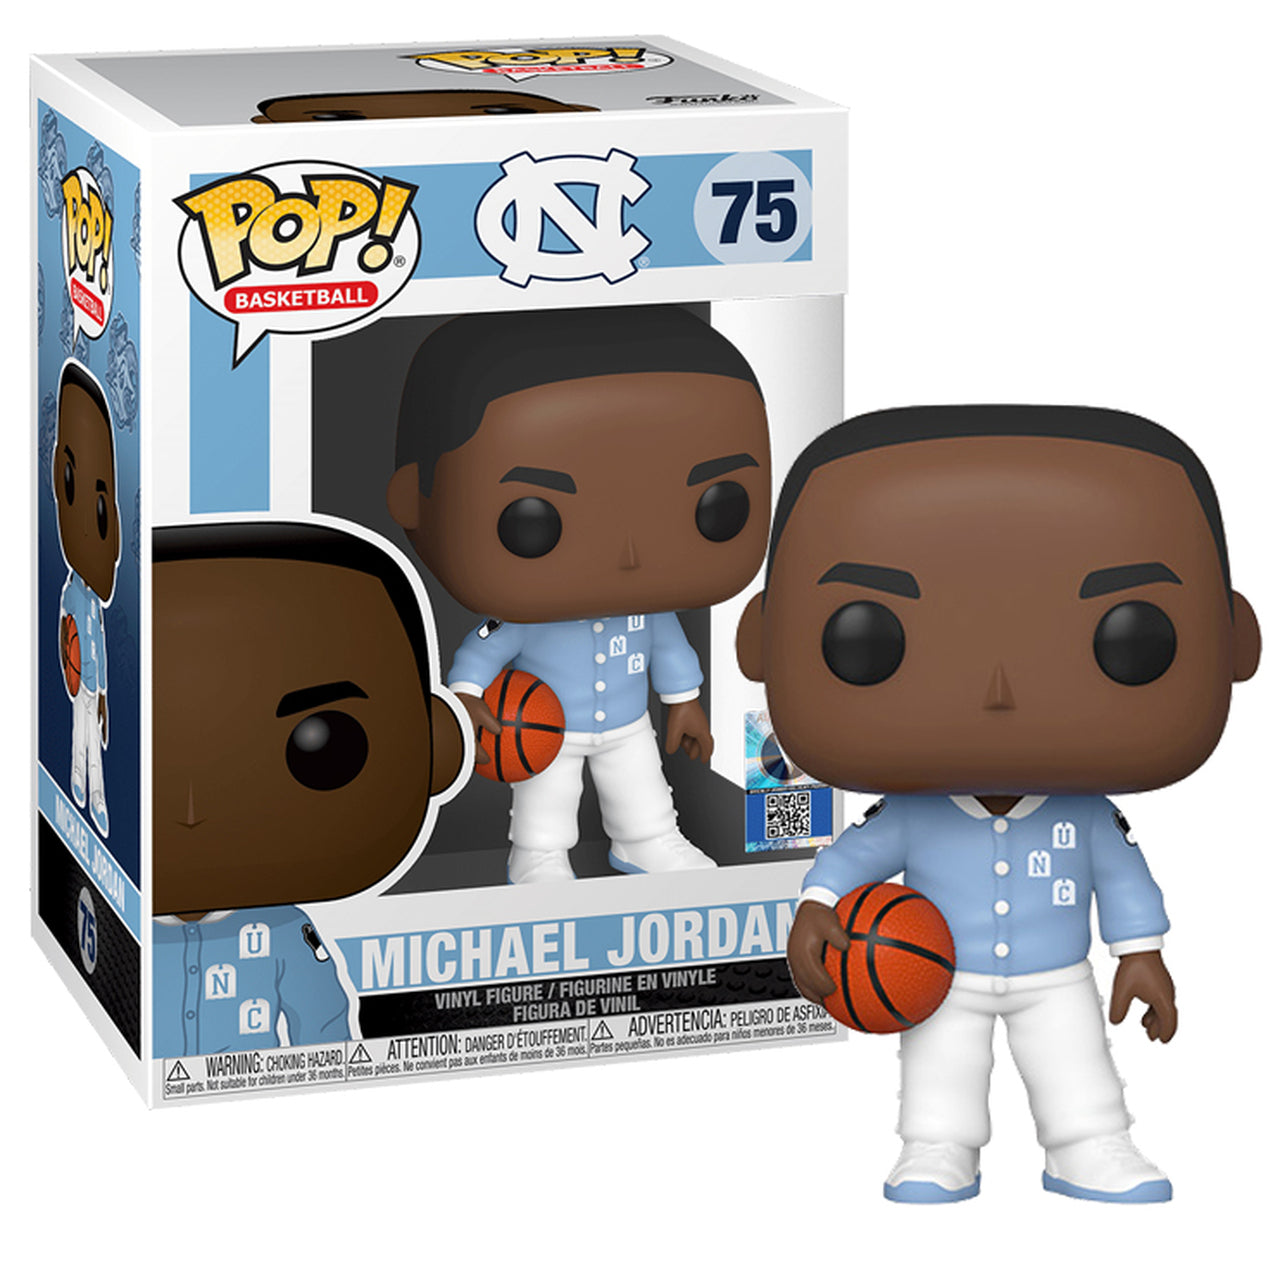 Michael Jordan w/Warm Up (University of North Carolina) Funko Pop! Basketball